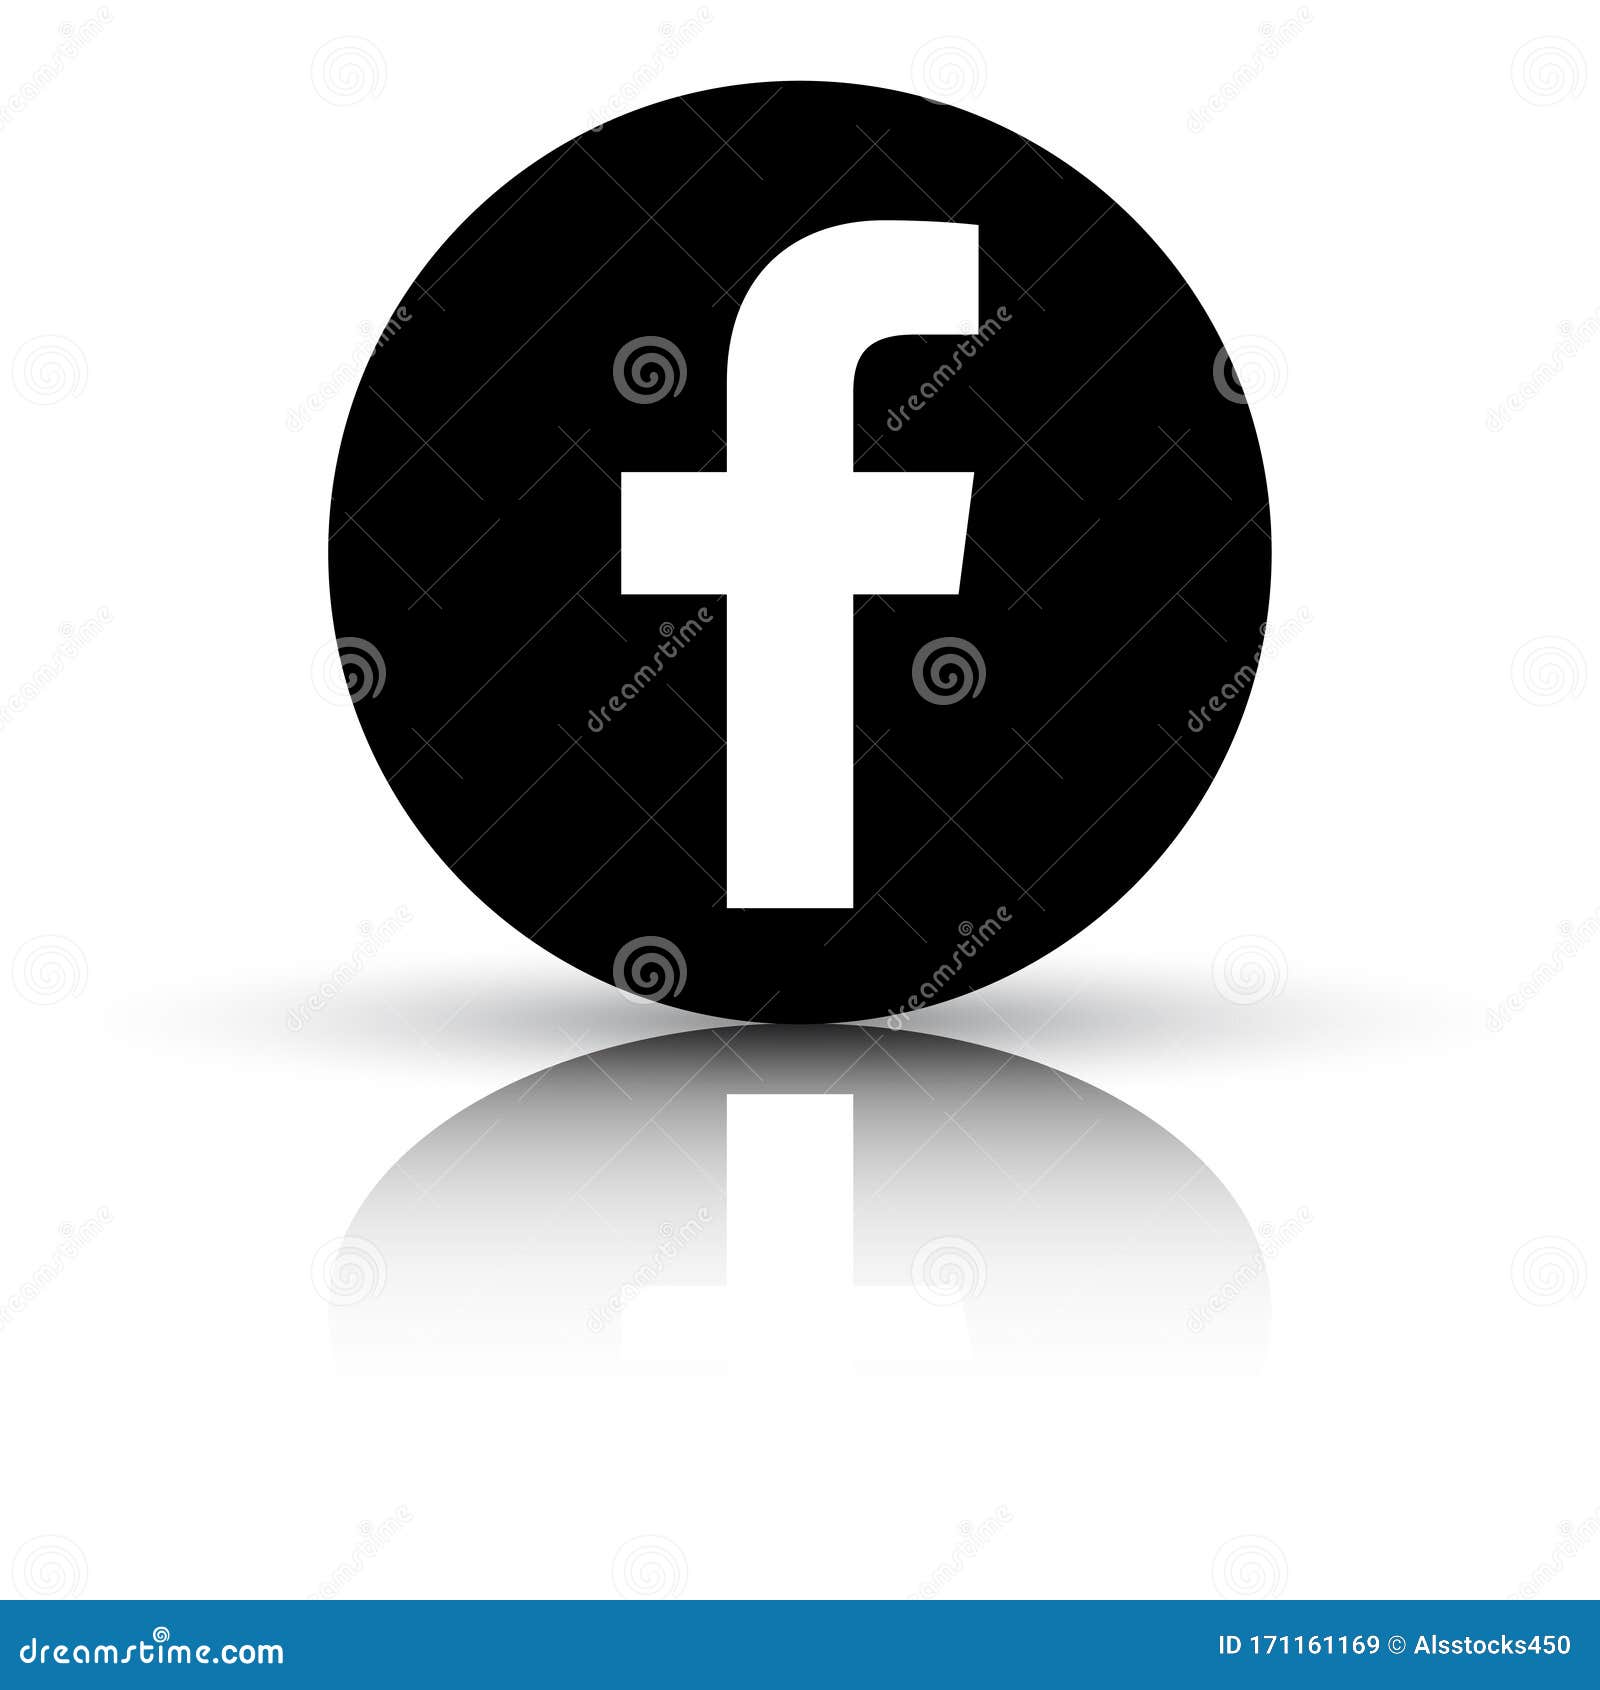 Facebook Round Logo Stock Illustrations 1 001 Facebook Round Logo Stock Illustrations Vectors Clipart Dreamstime